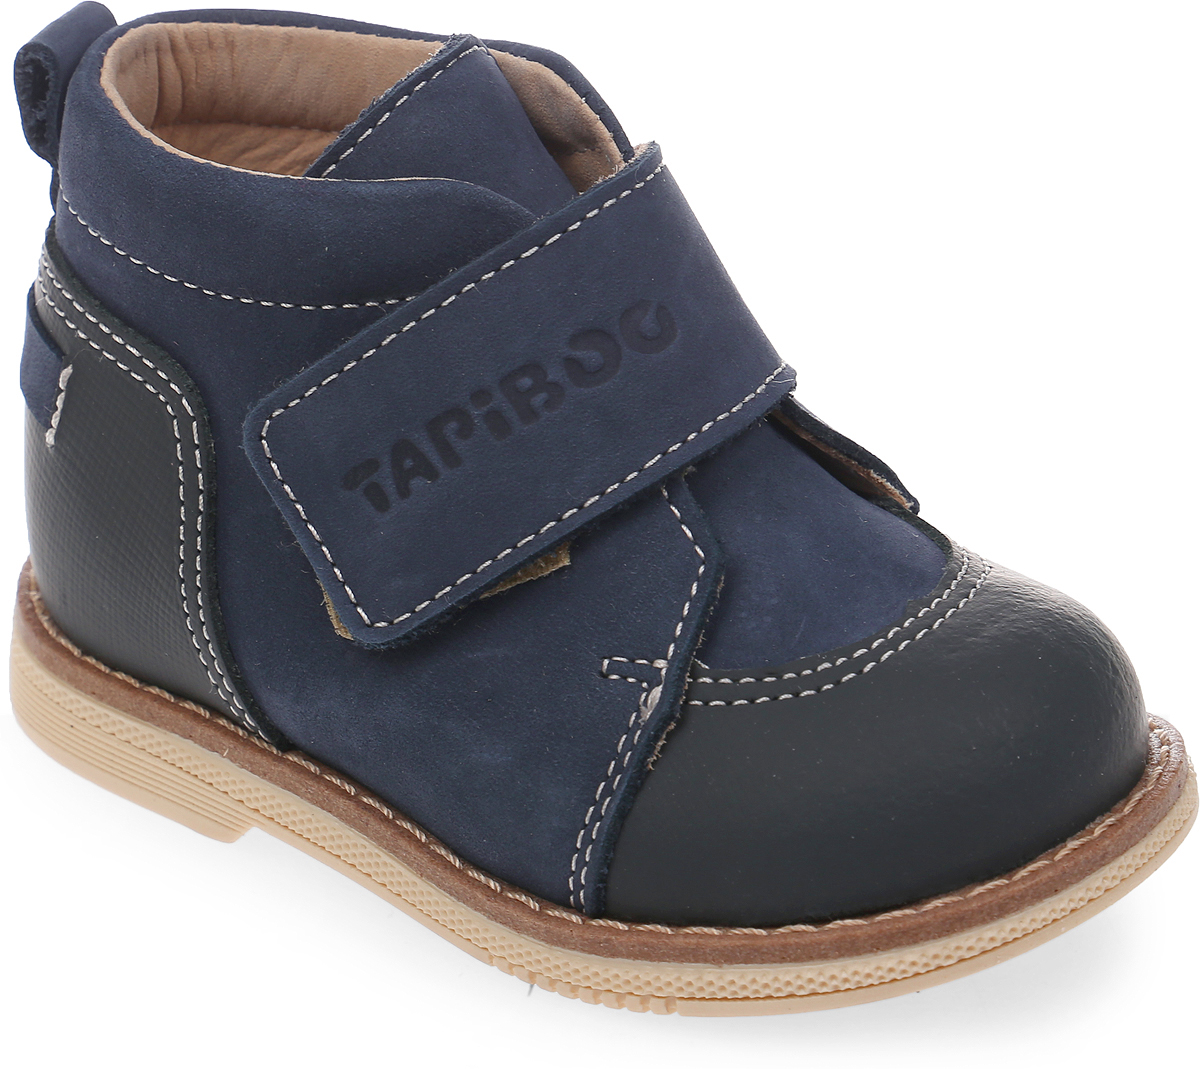 Ботинки для мальчика Tapiboo Ирис, цвет: синий. FT-24015.18-OL08O.01. Размер 20